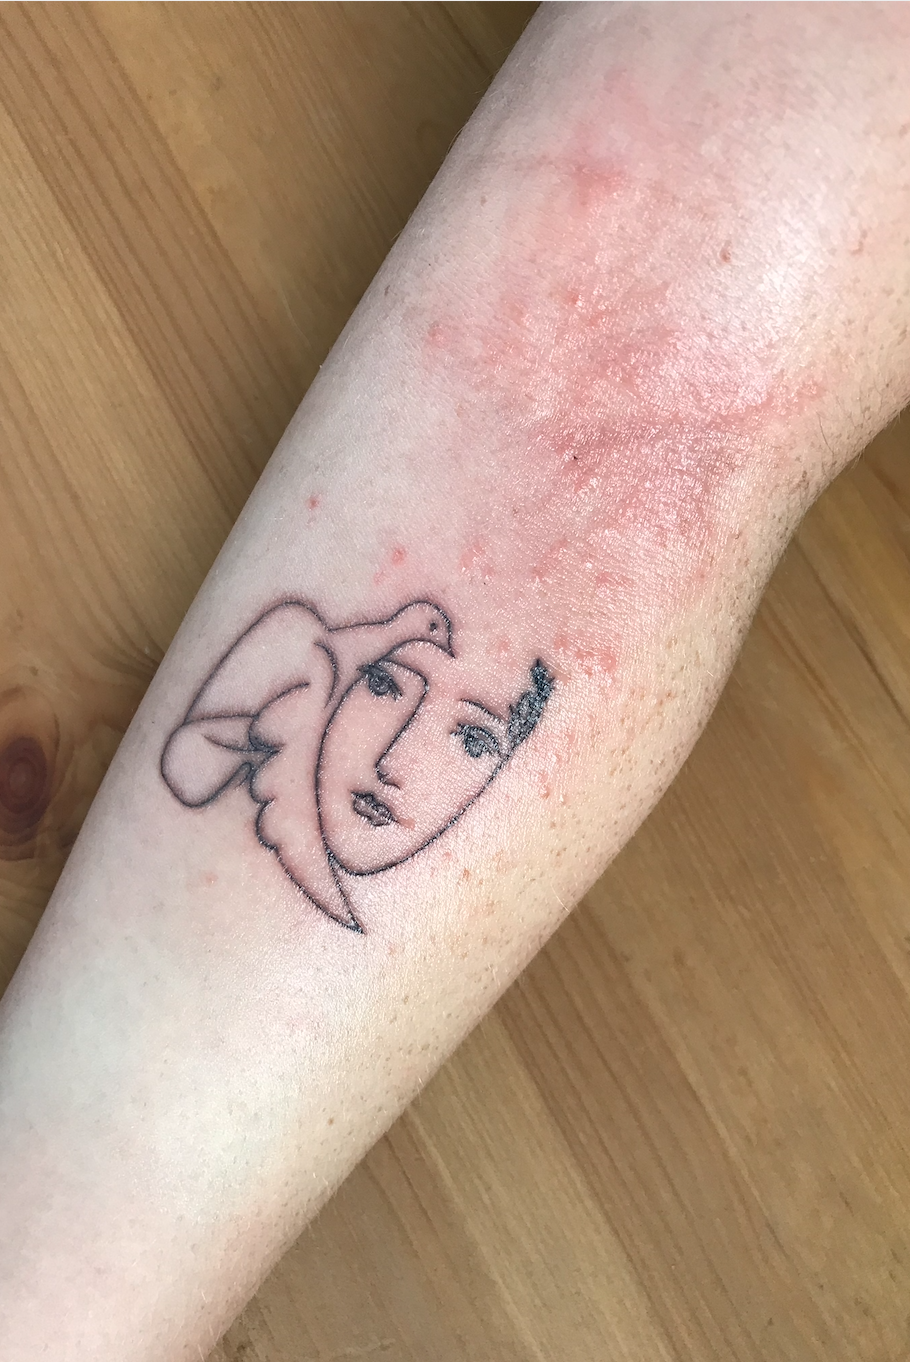 tattoo allergic reaction rash